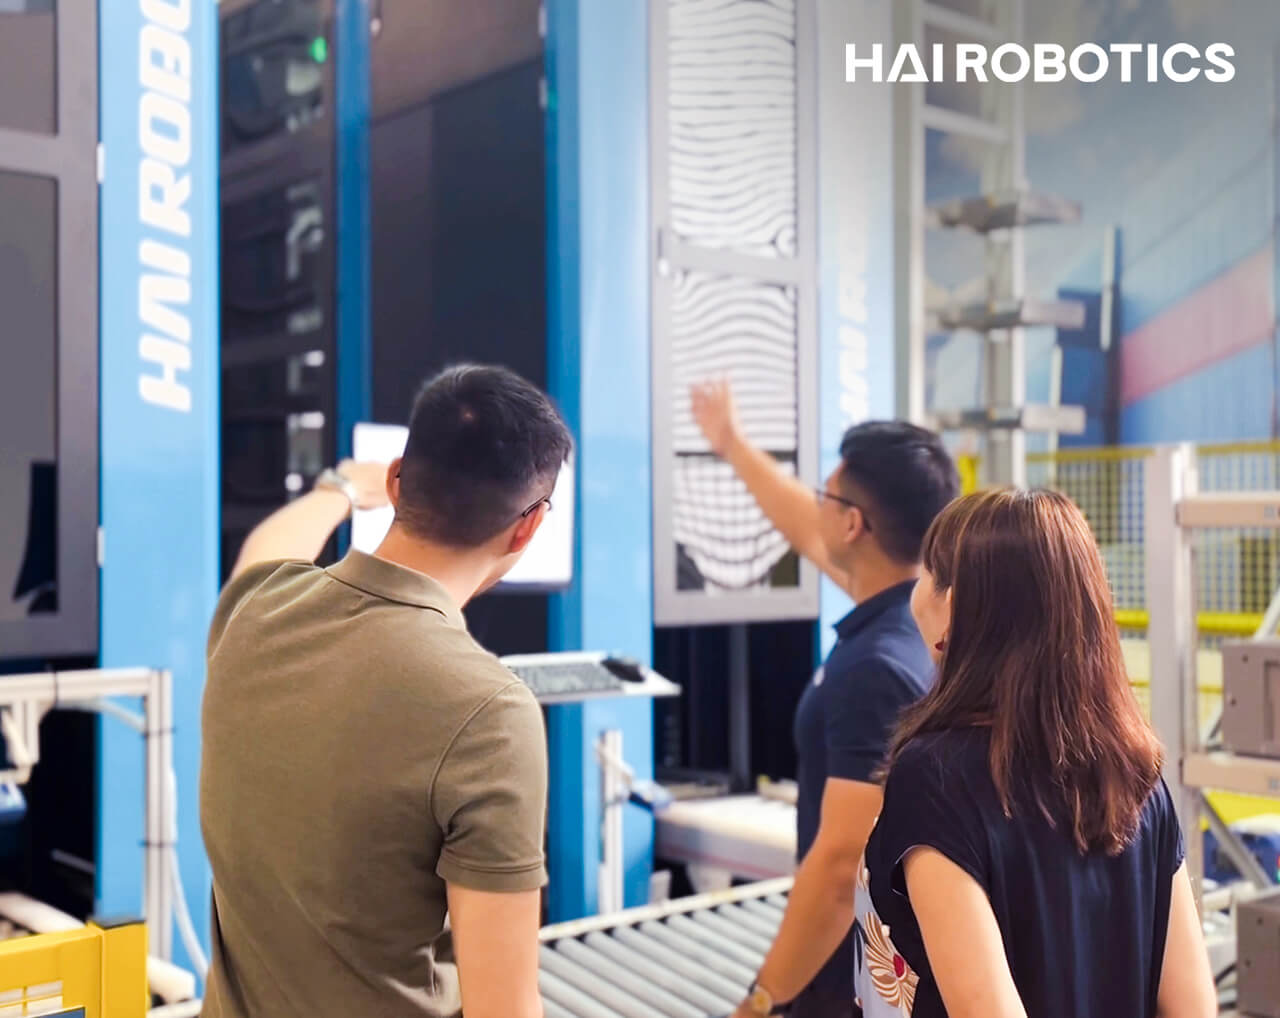 HAI ROBOTICS Singapore team shows HAIPICK System to customers 